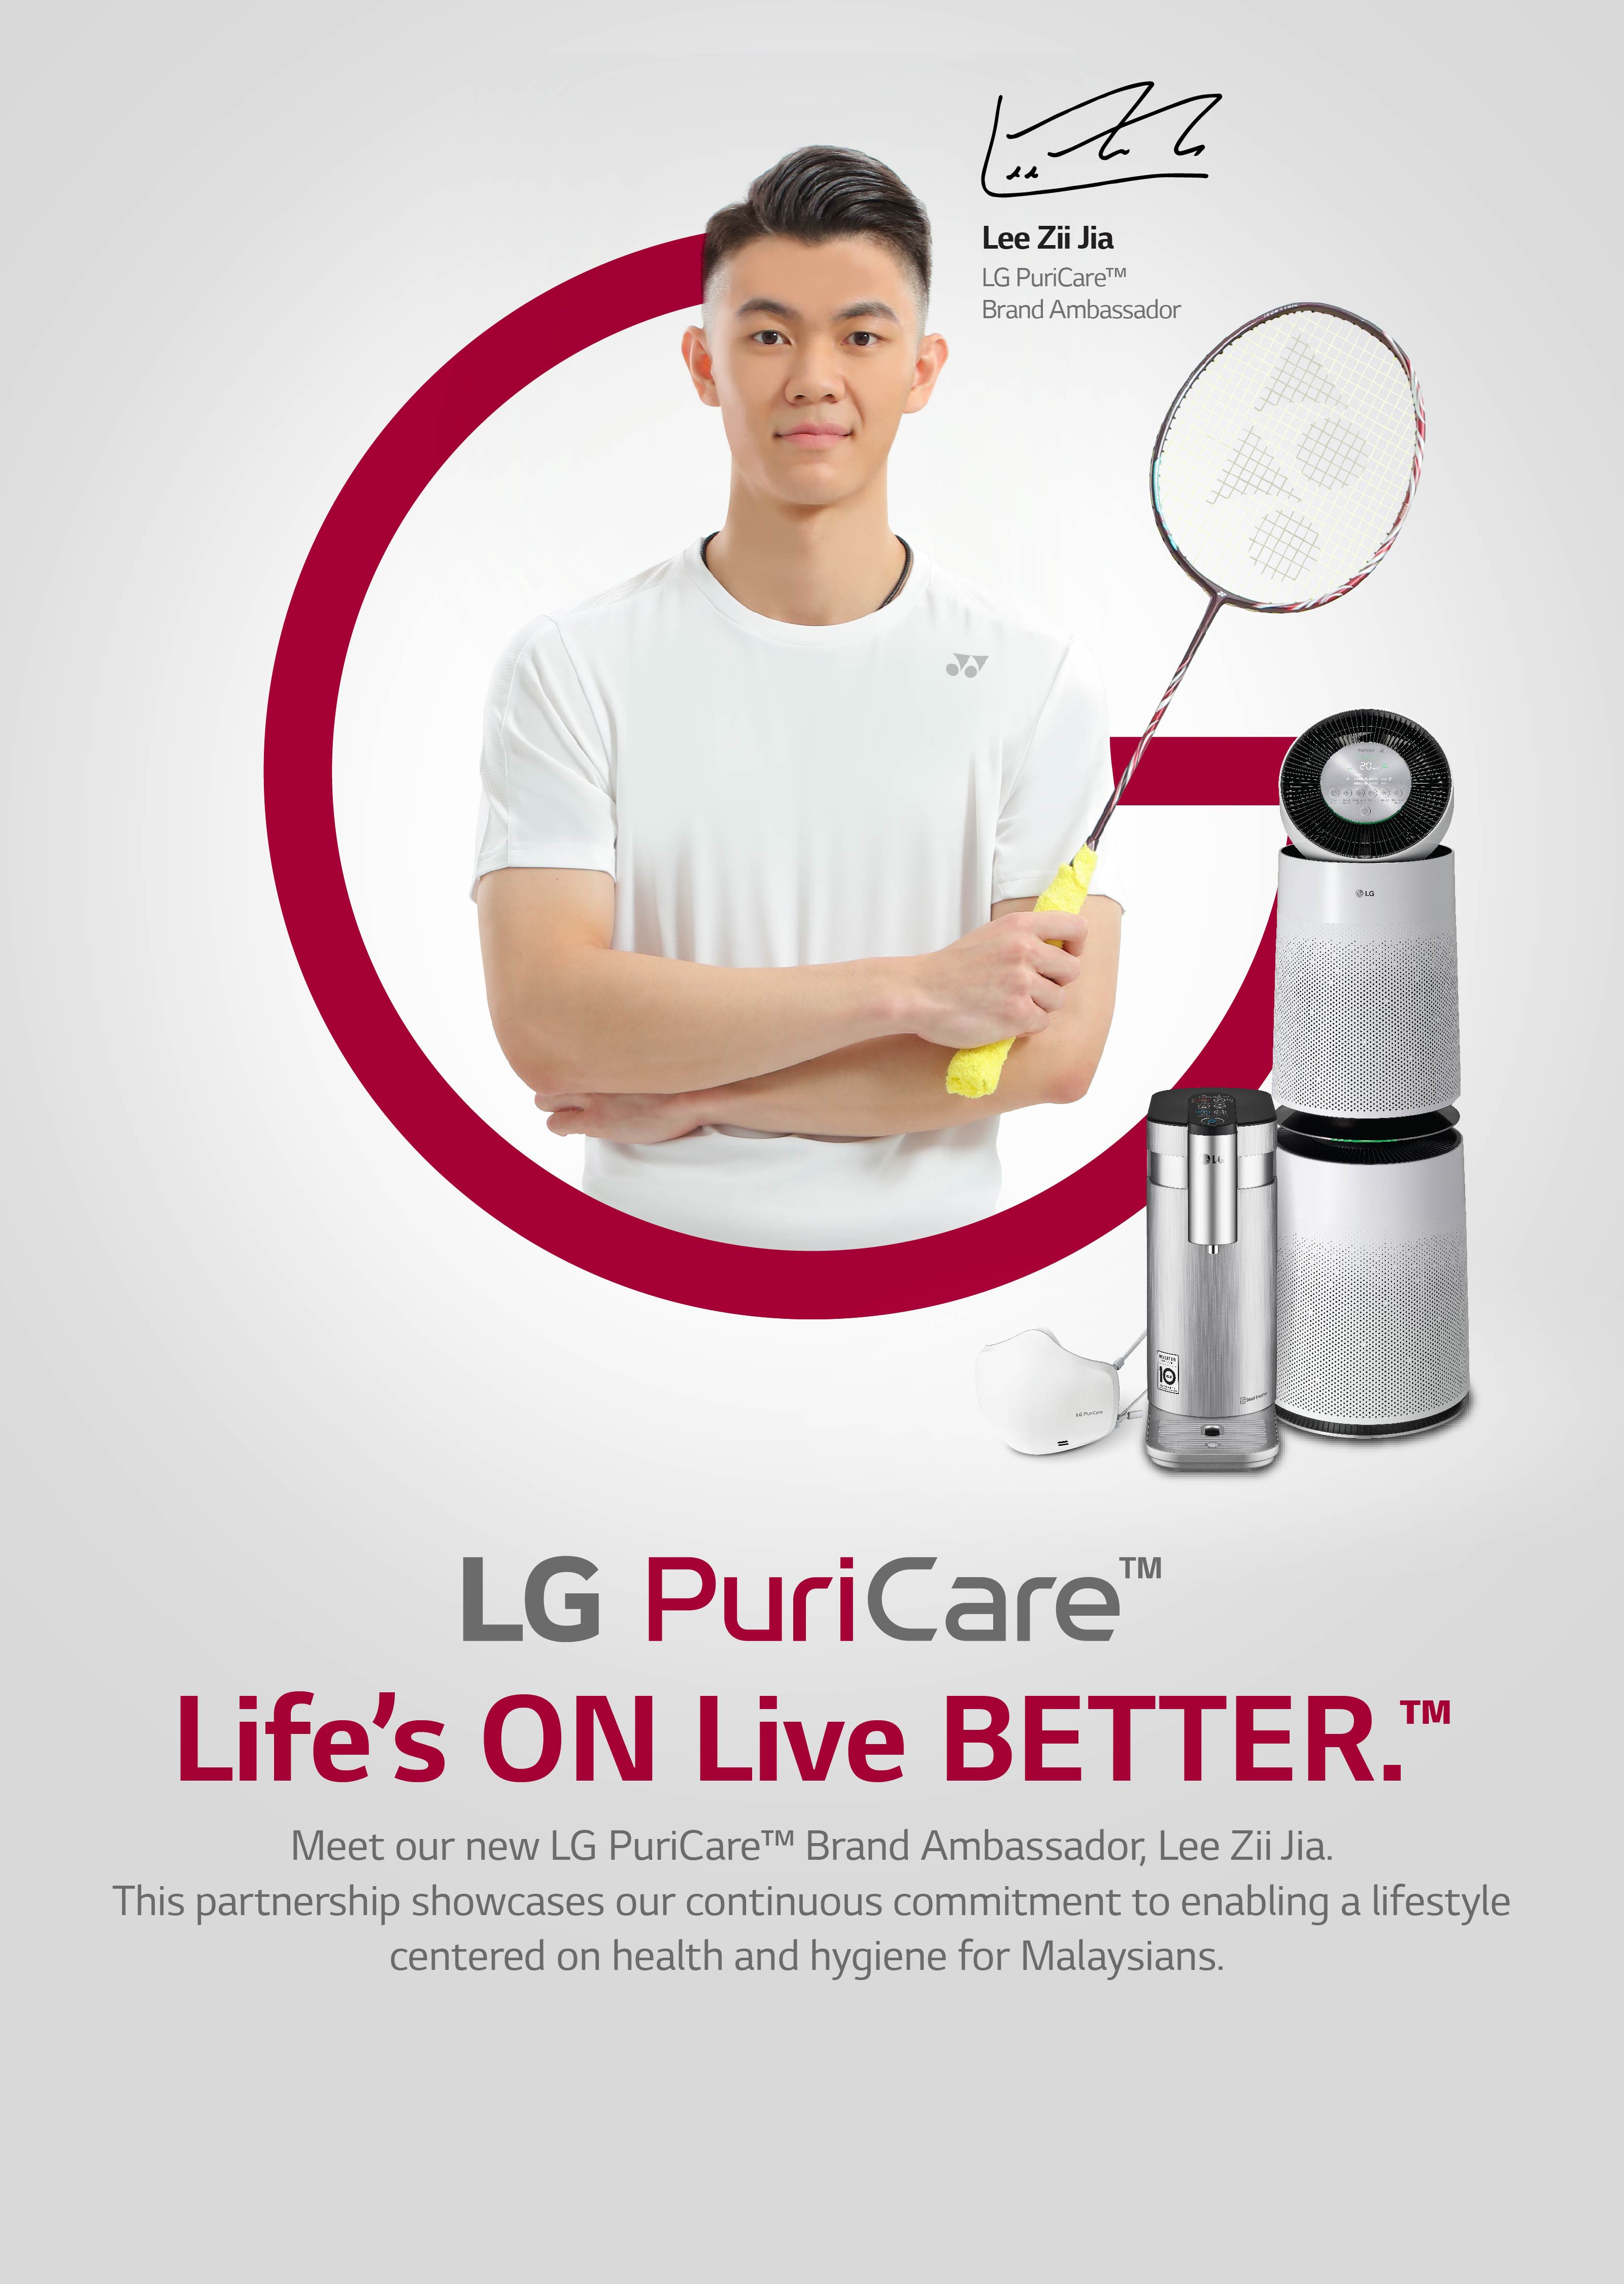 Lee Zii Jia is the Brand Ambassador for LG PuriCare™ of LG Electronics LG Malaysia